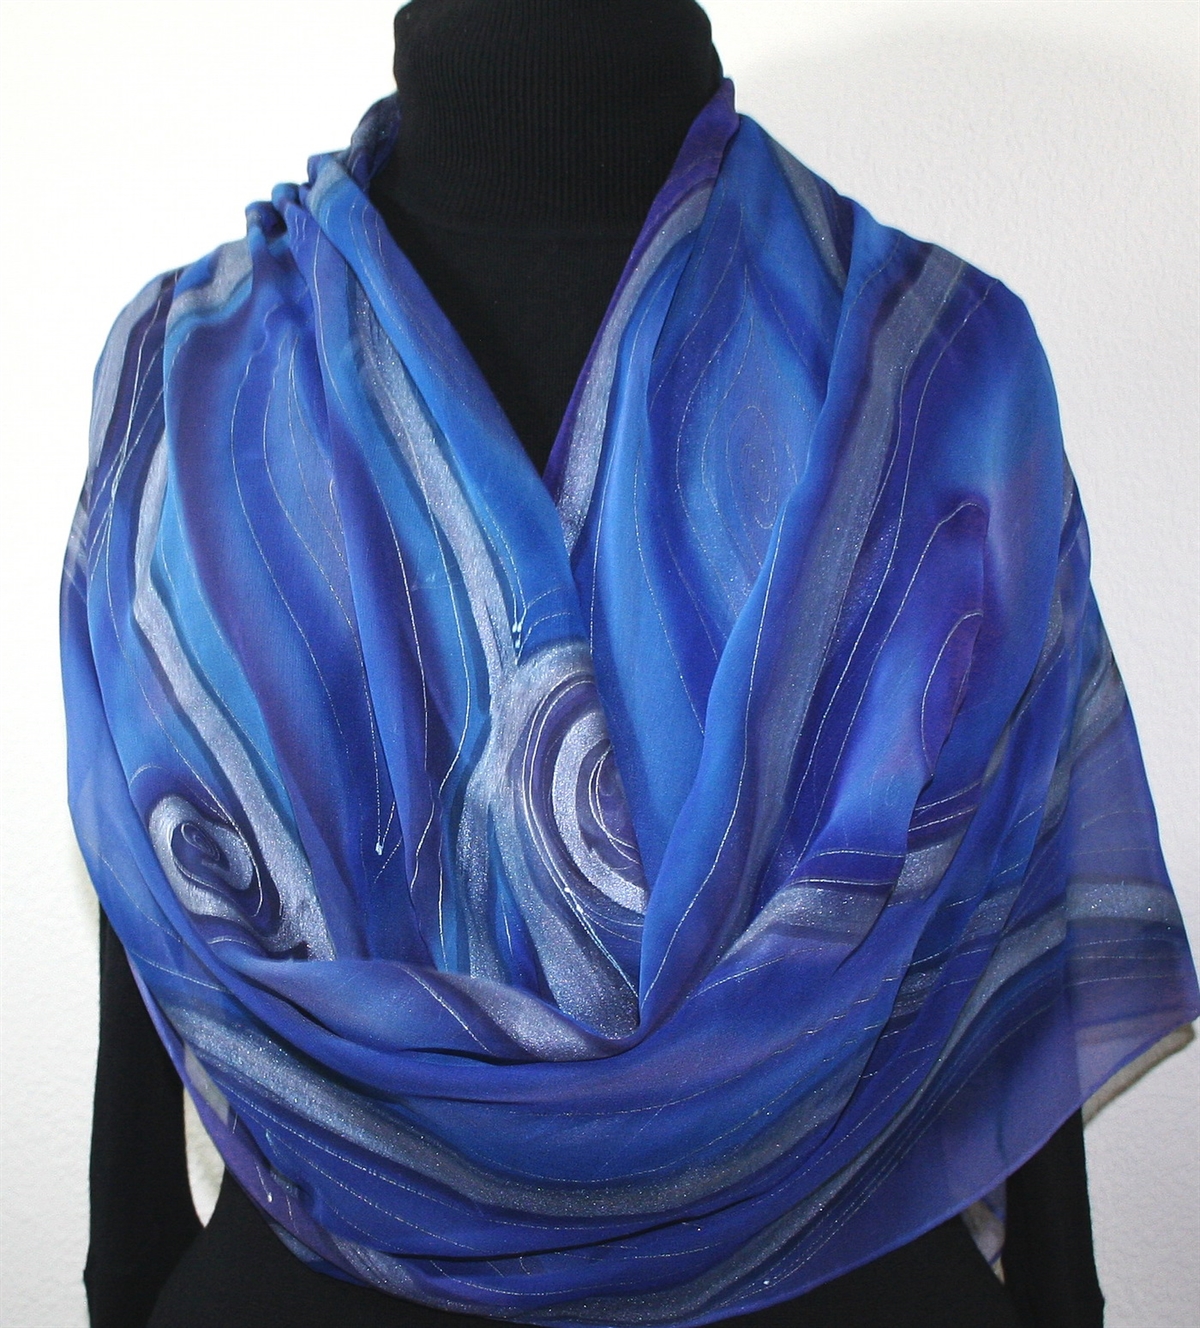 Silk Scarves Online Shop - Blue, Purple Hand Painted Chiffon Silk Shawl ...